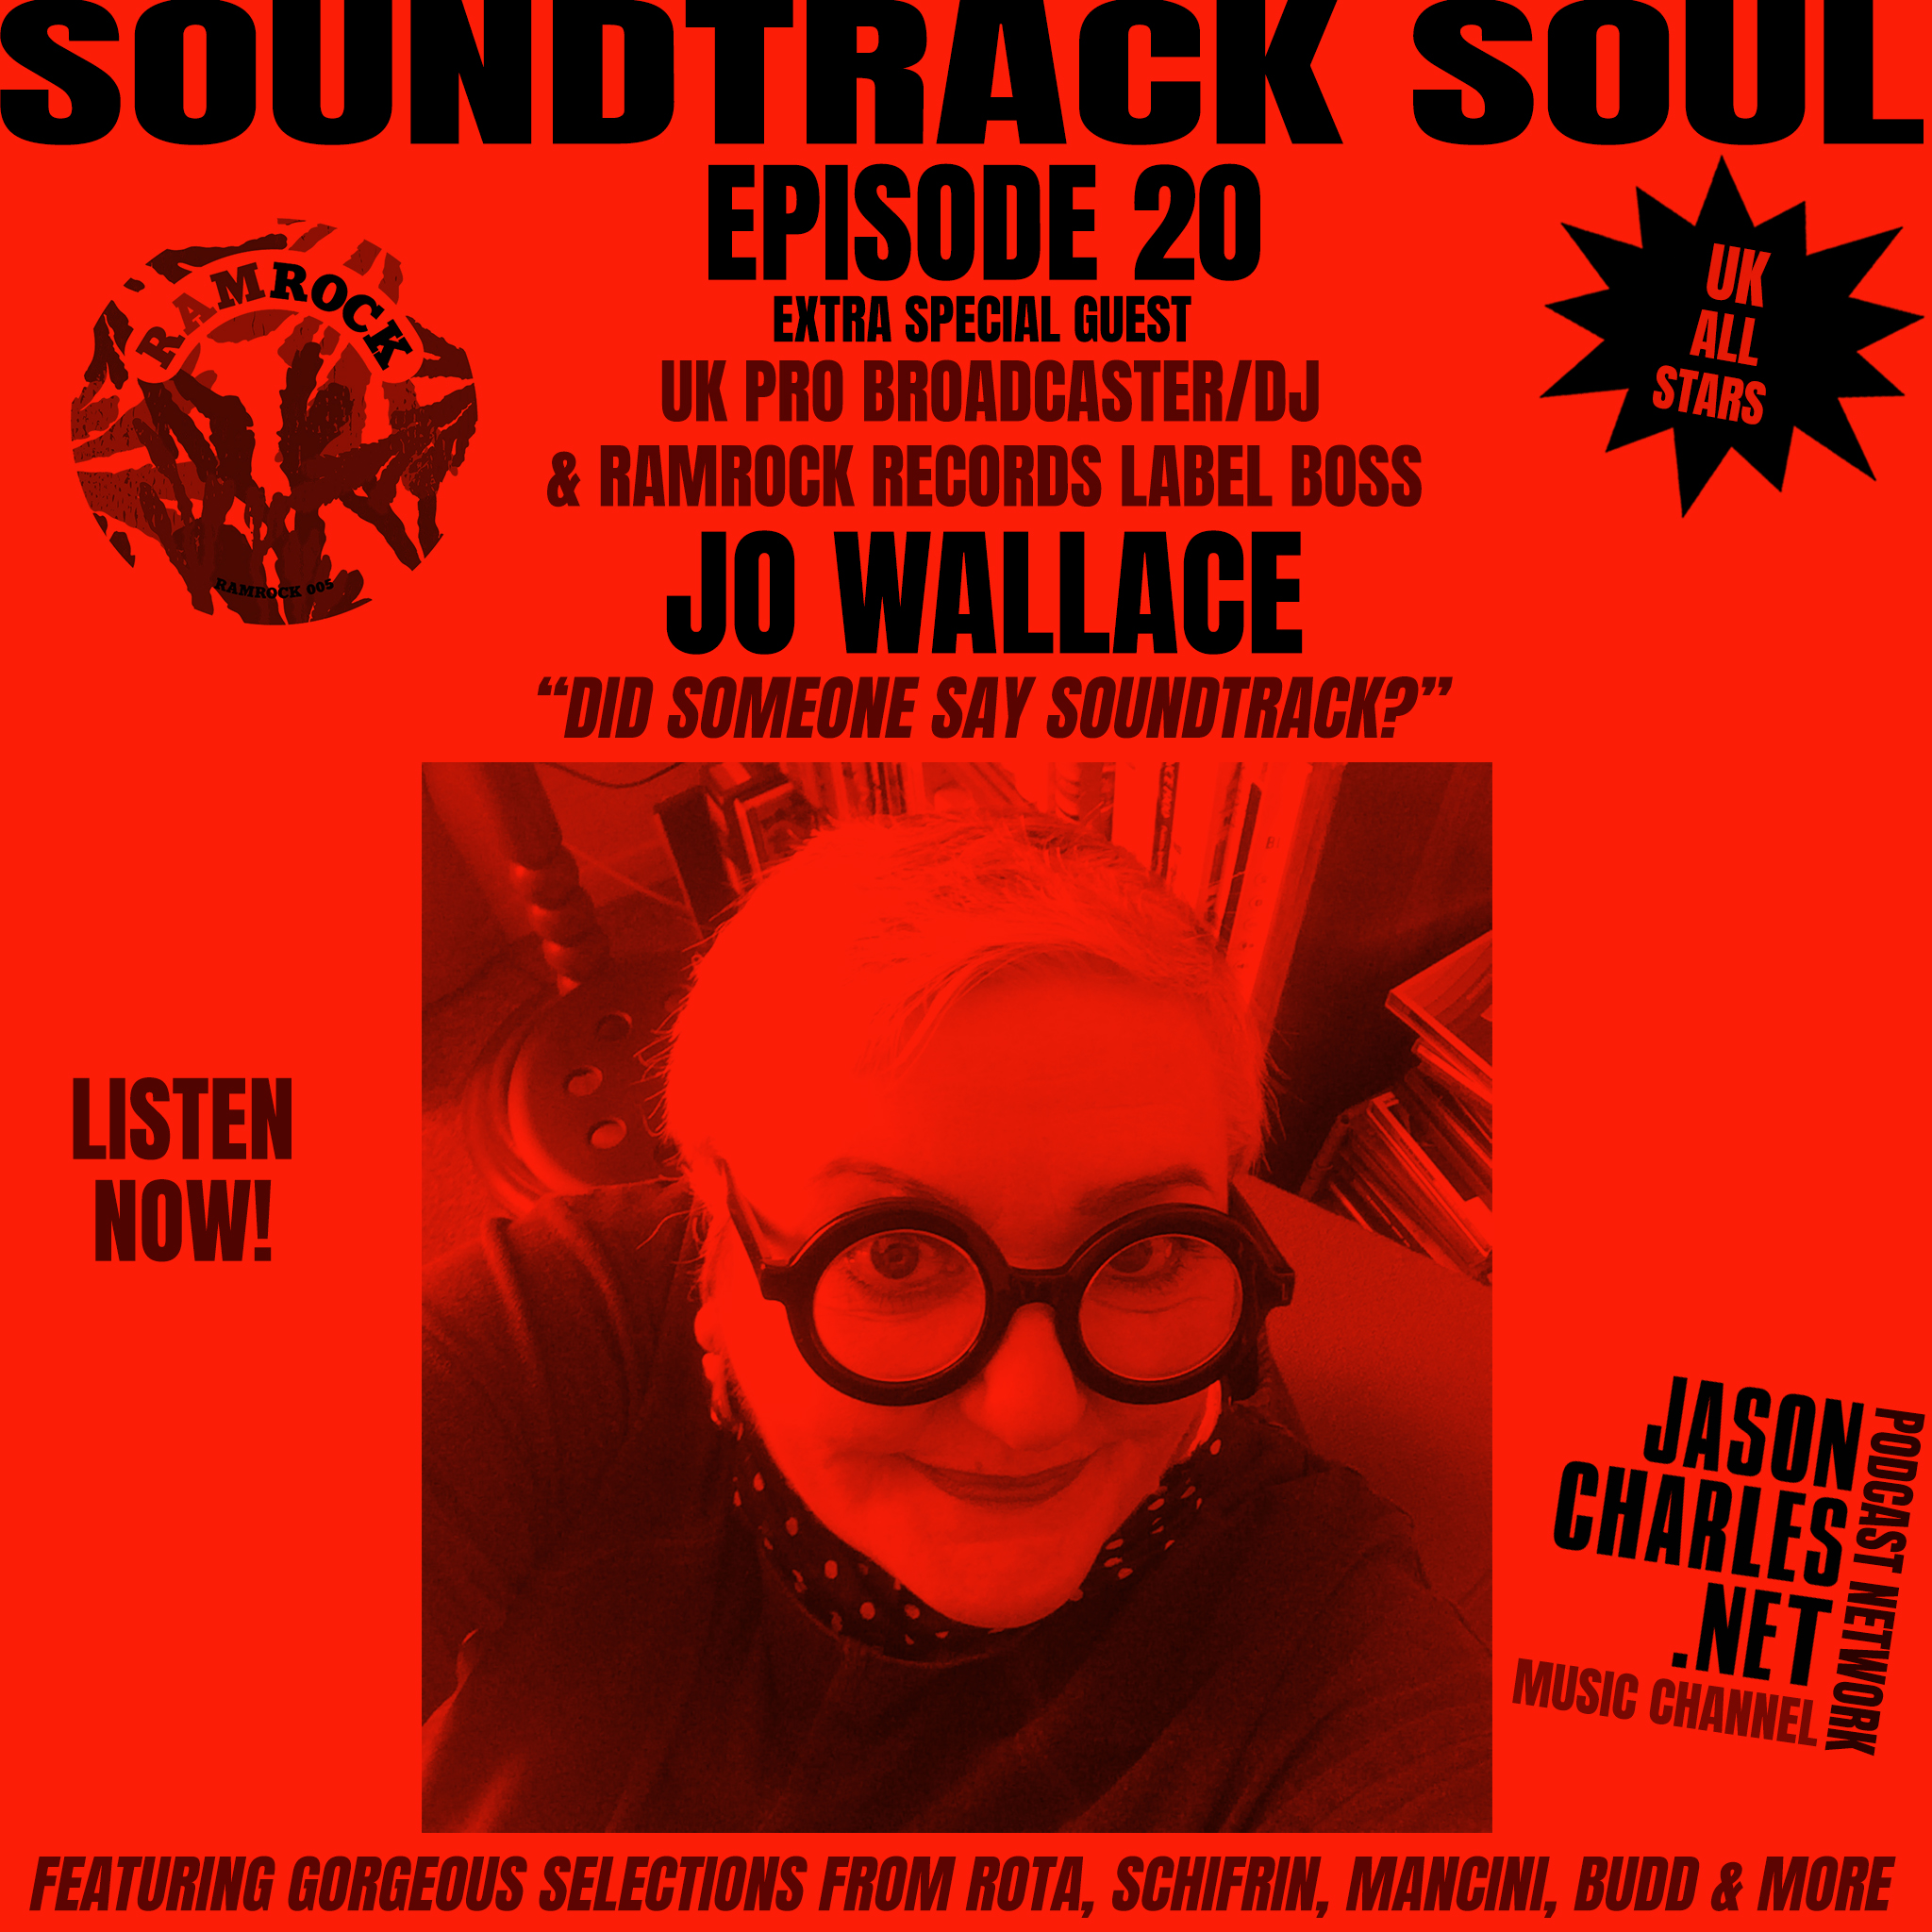 SOUNDTRACK SOUL Episode 20 JO WALLACE "Did Someone Say Soundtrack?" Mix